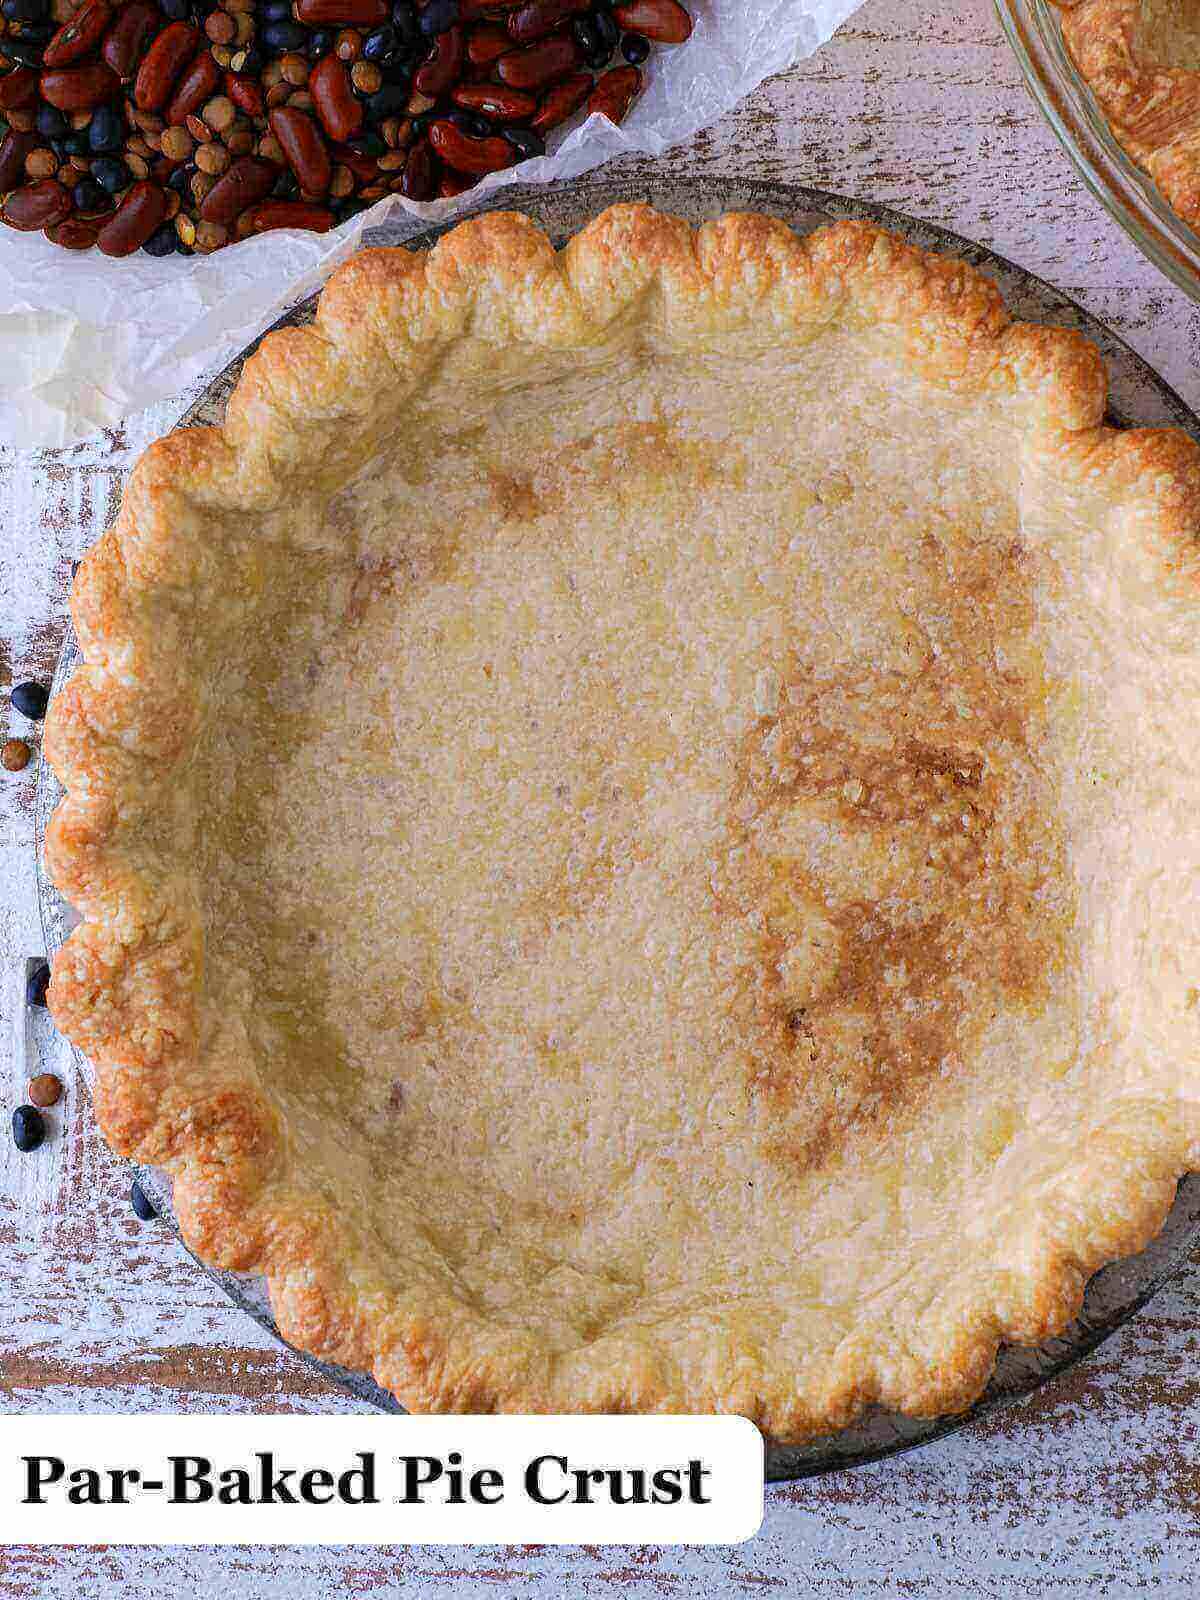 Text: a par baked pie crust.